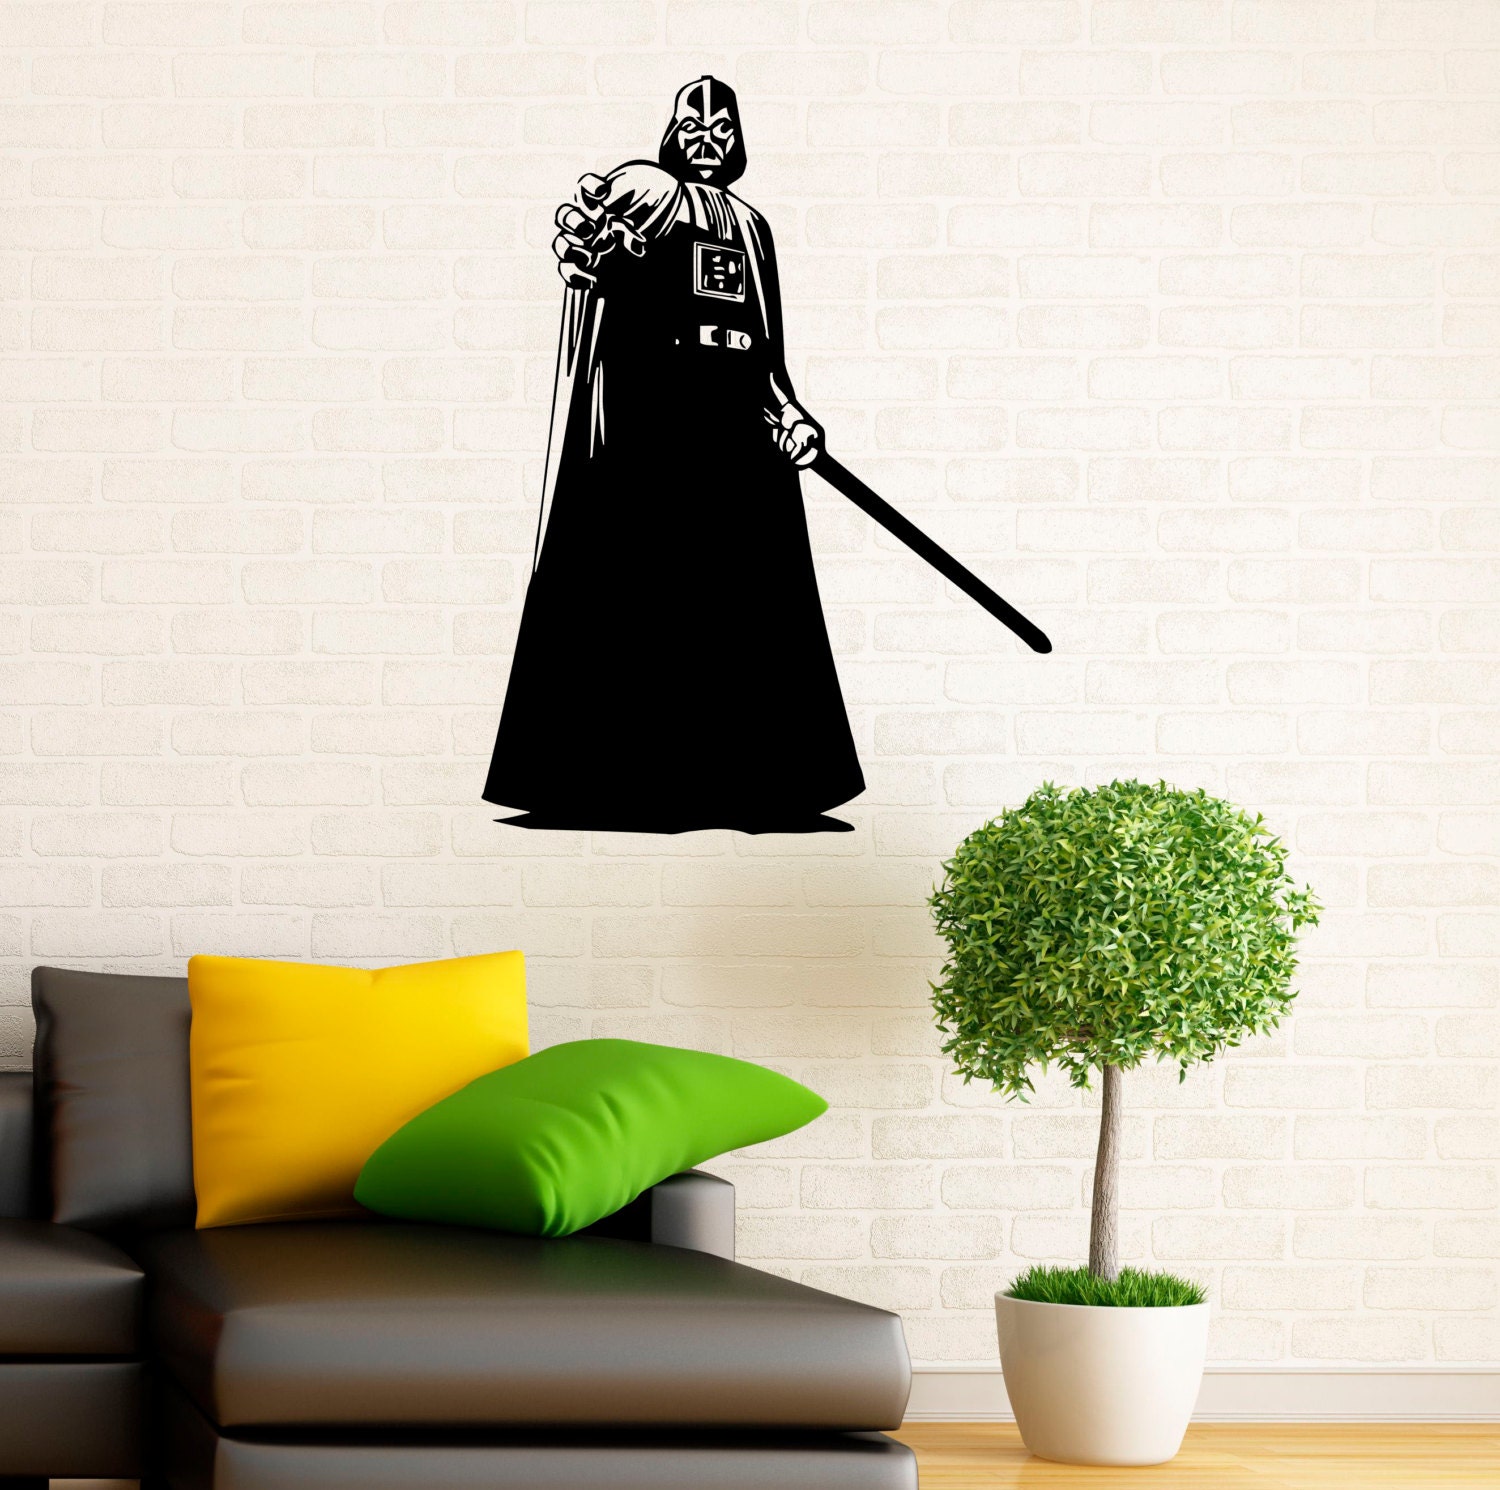 Darth Vader Wall Decal Vinyl Stickers Star Wars Home Interior Art Design Murals Bedroom Wall Decor (10s01w)